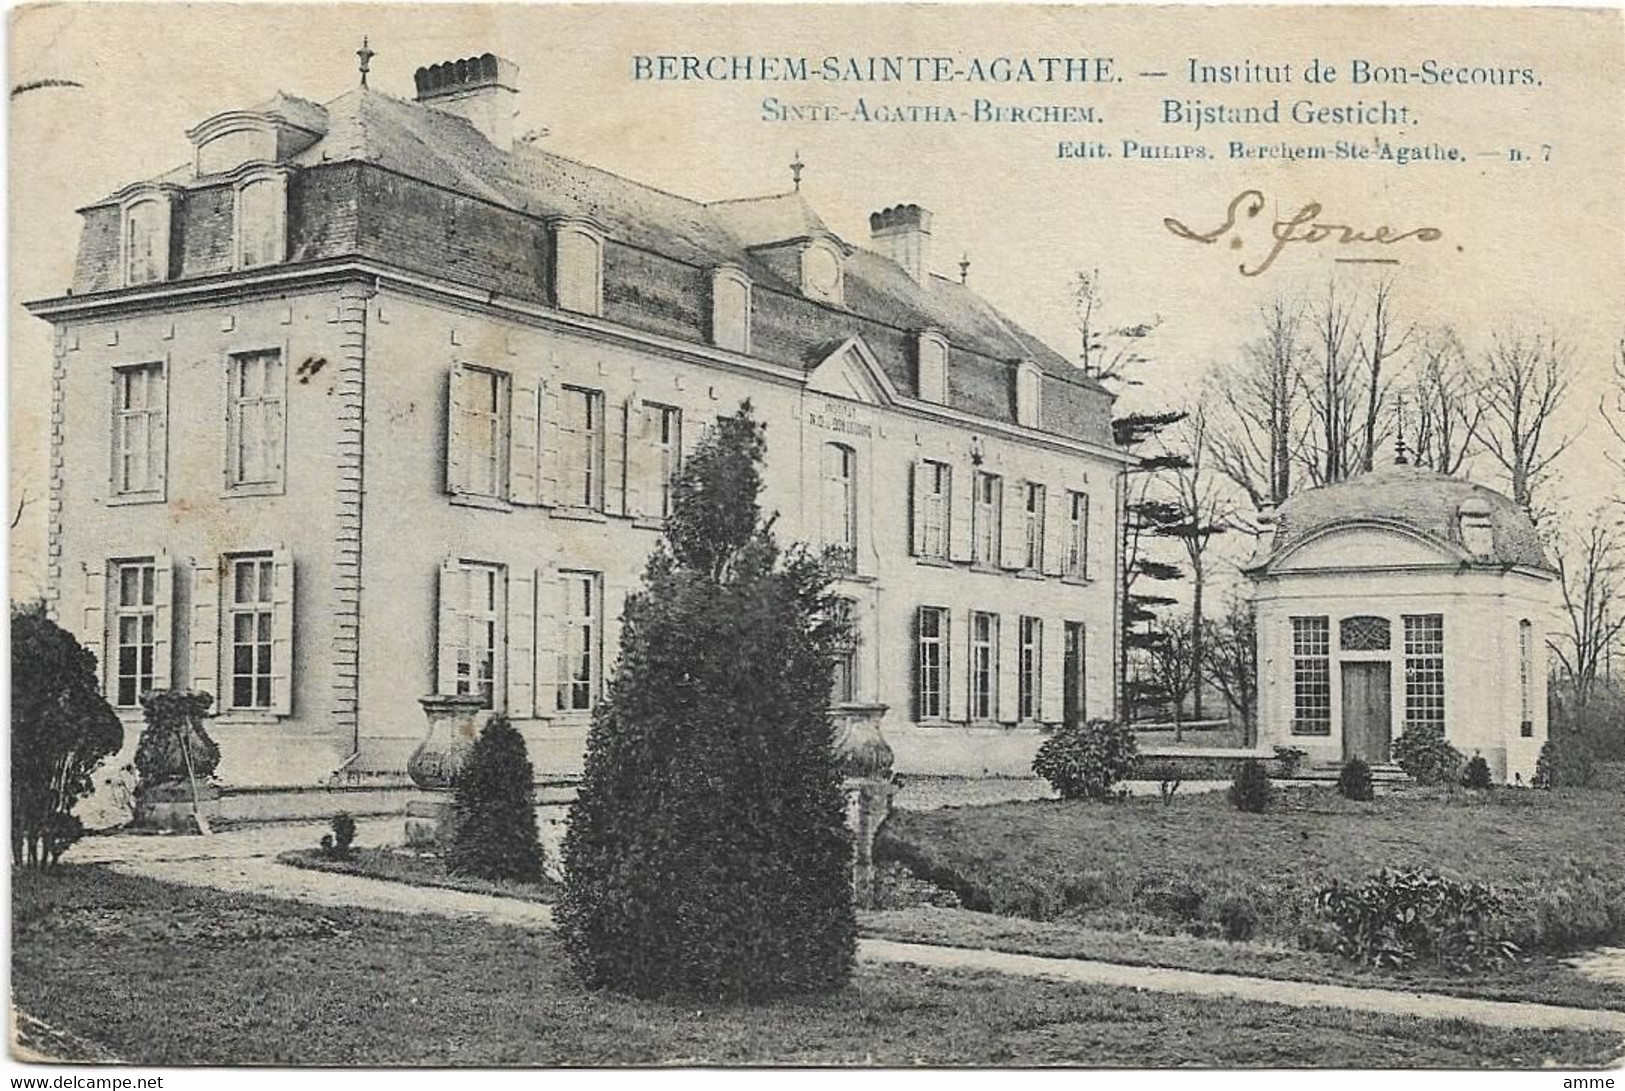 Sint-Agatha-Berchem   *   Institut De Bon-Secours - Bijstand Gesticht - Berchem-Ste-Agathe - St-Agatha-Berchem